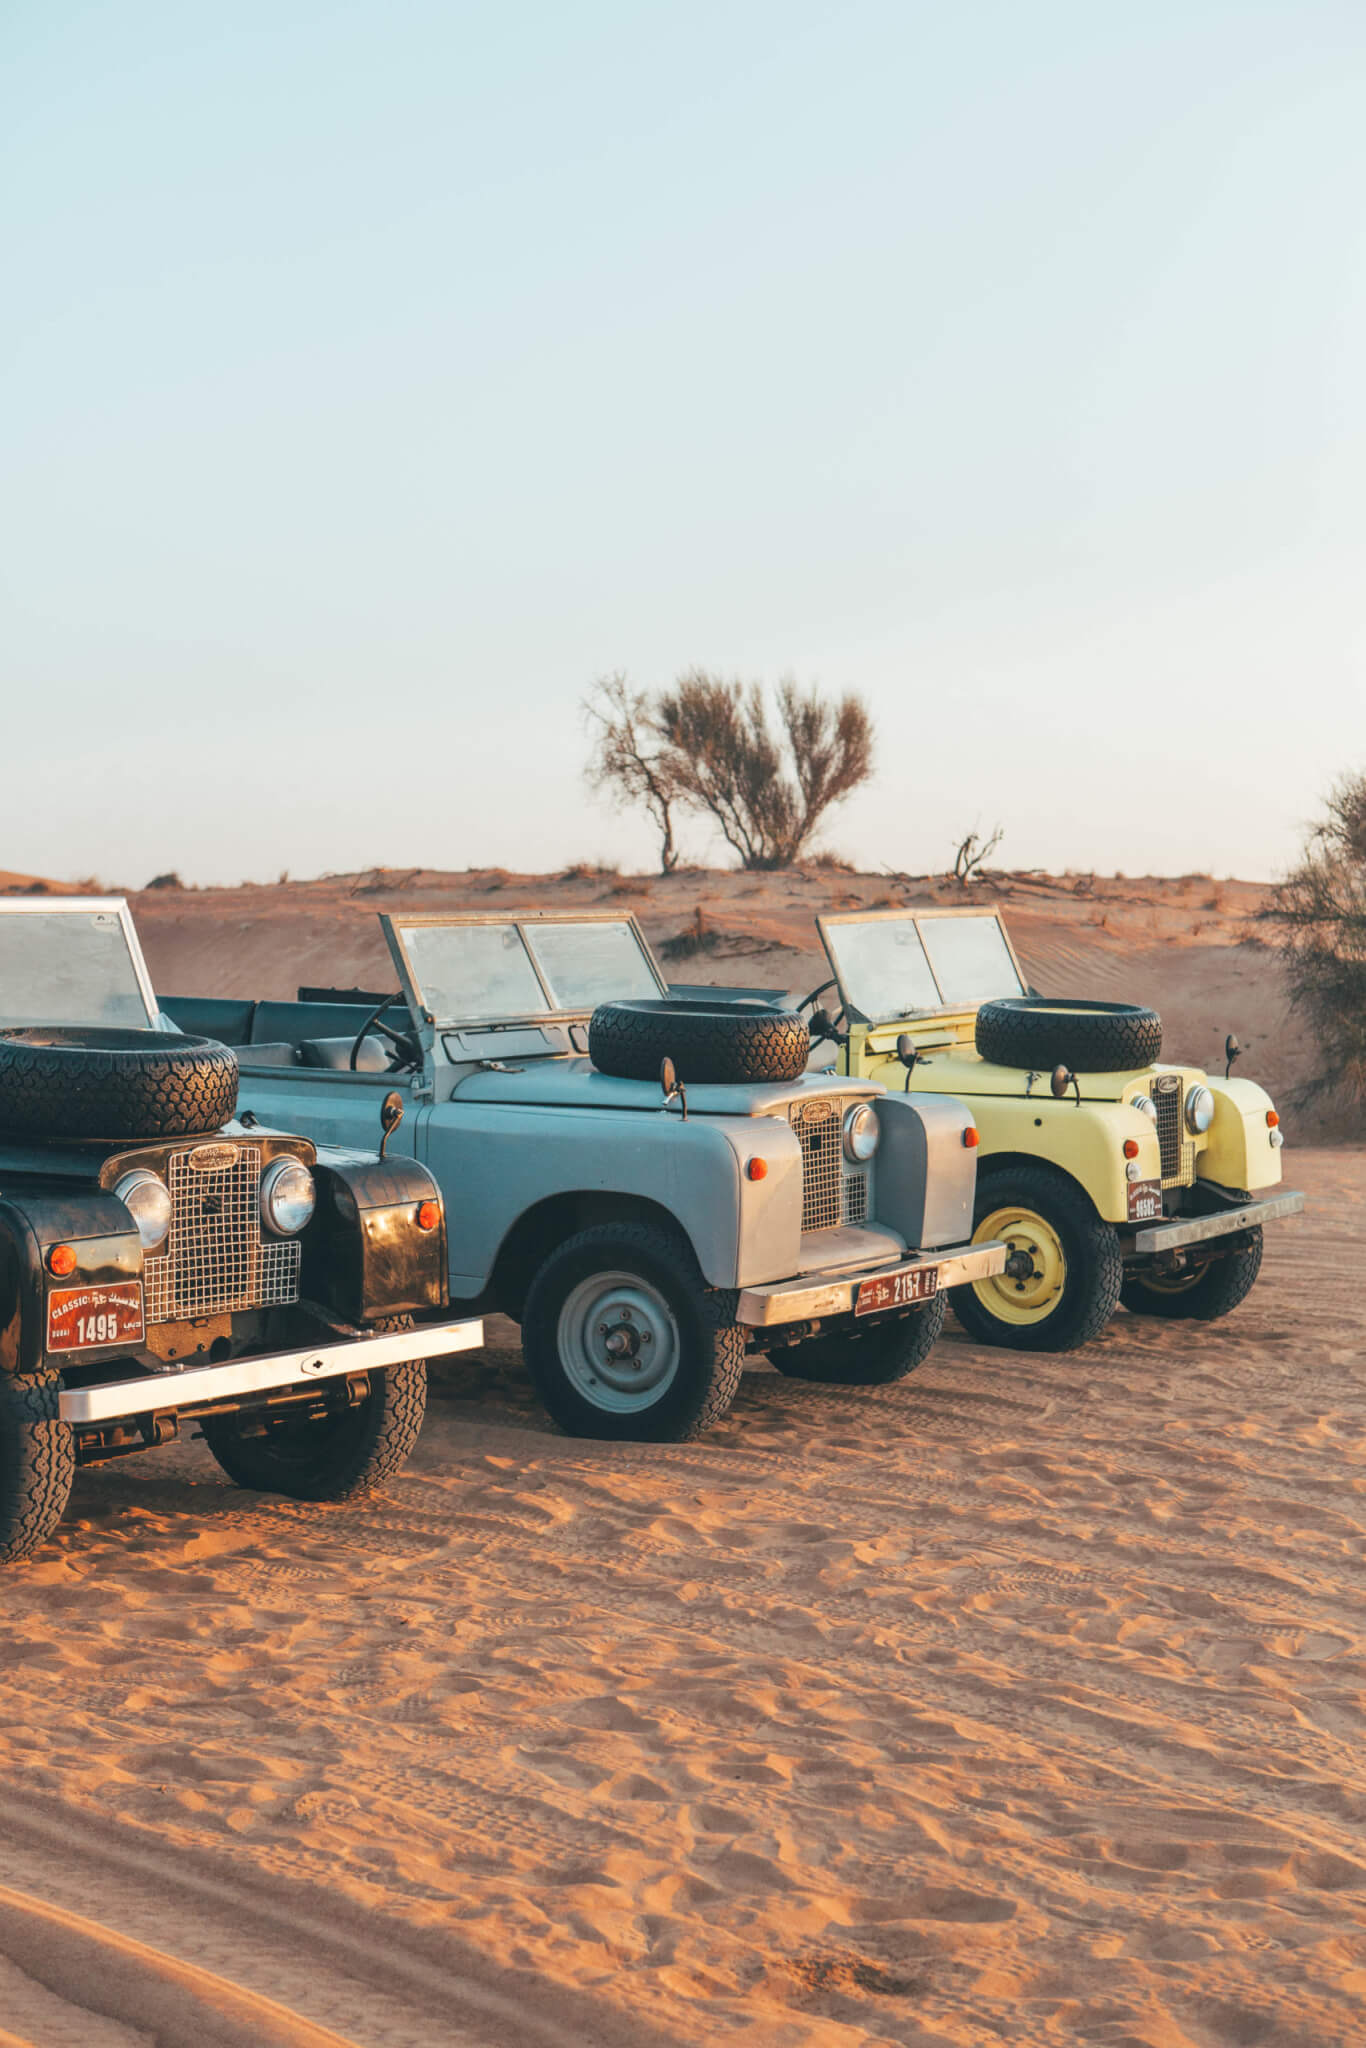 5 best things to do in Dubai 2020 - Platinum Heritage Dubai Desert Safari